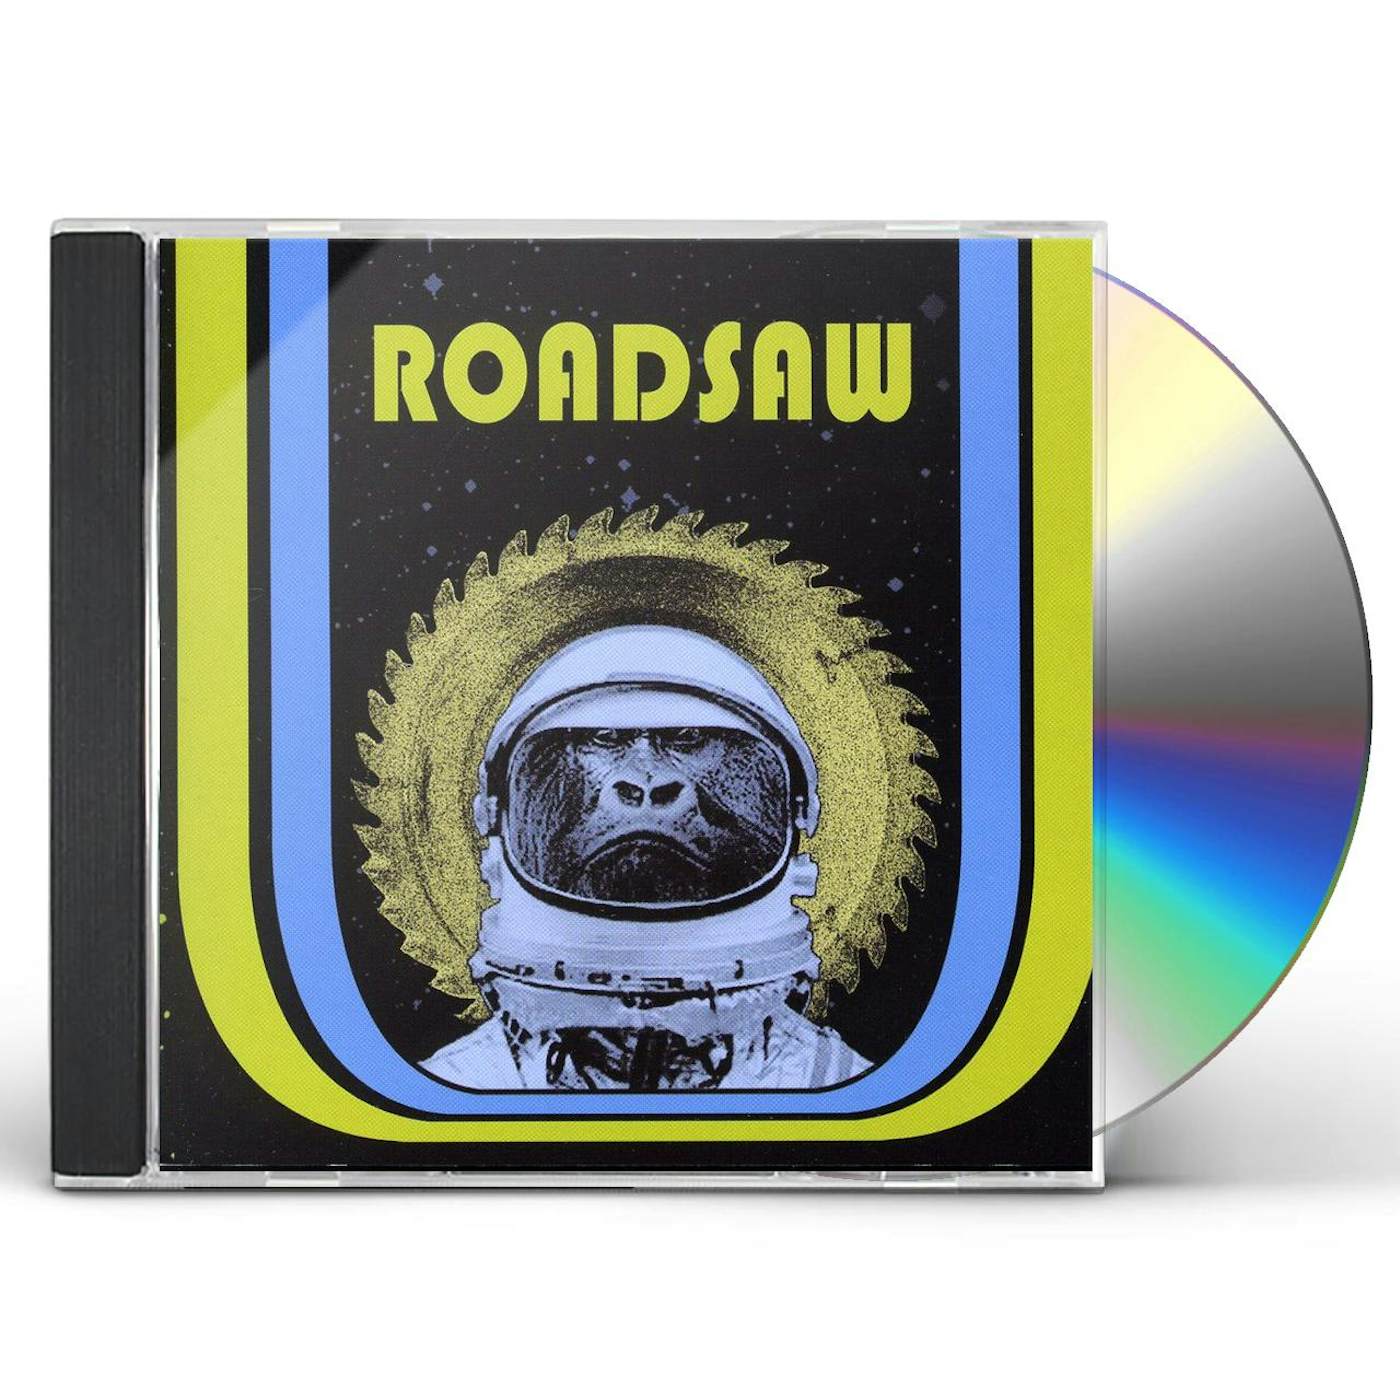 ROADSAW CD